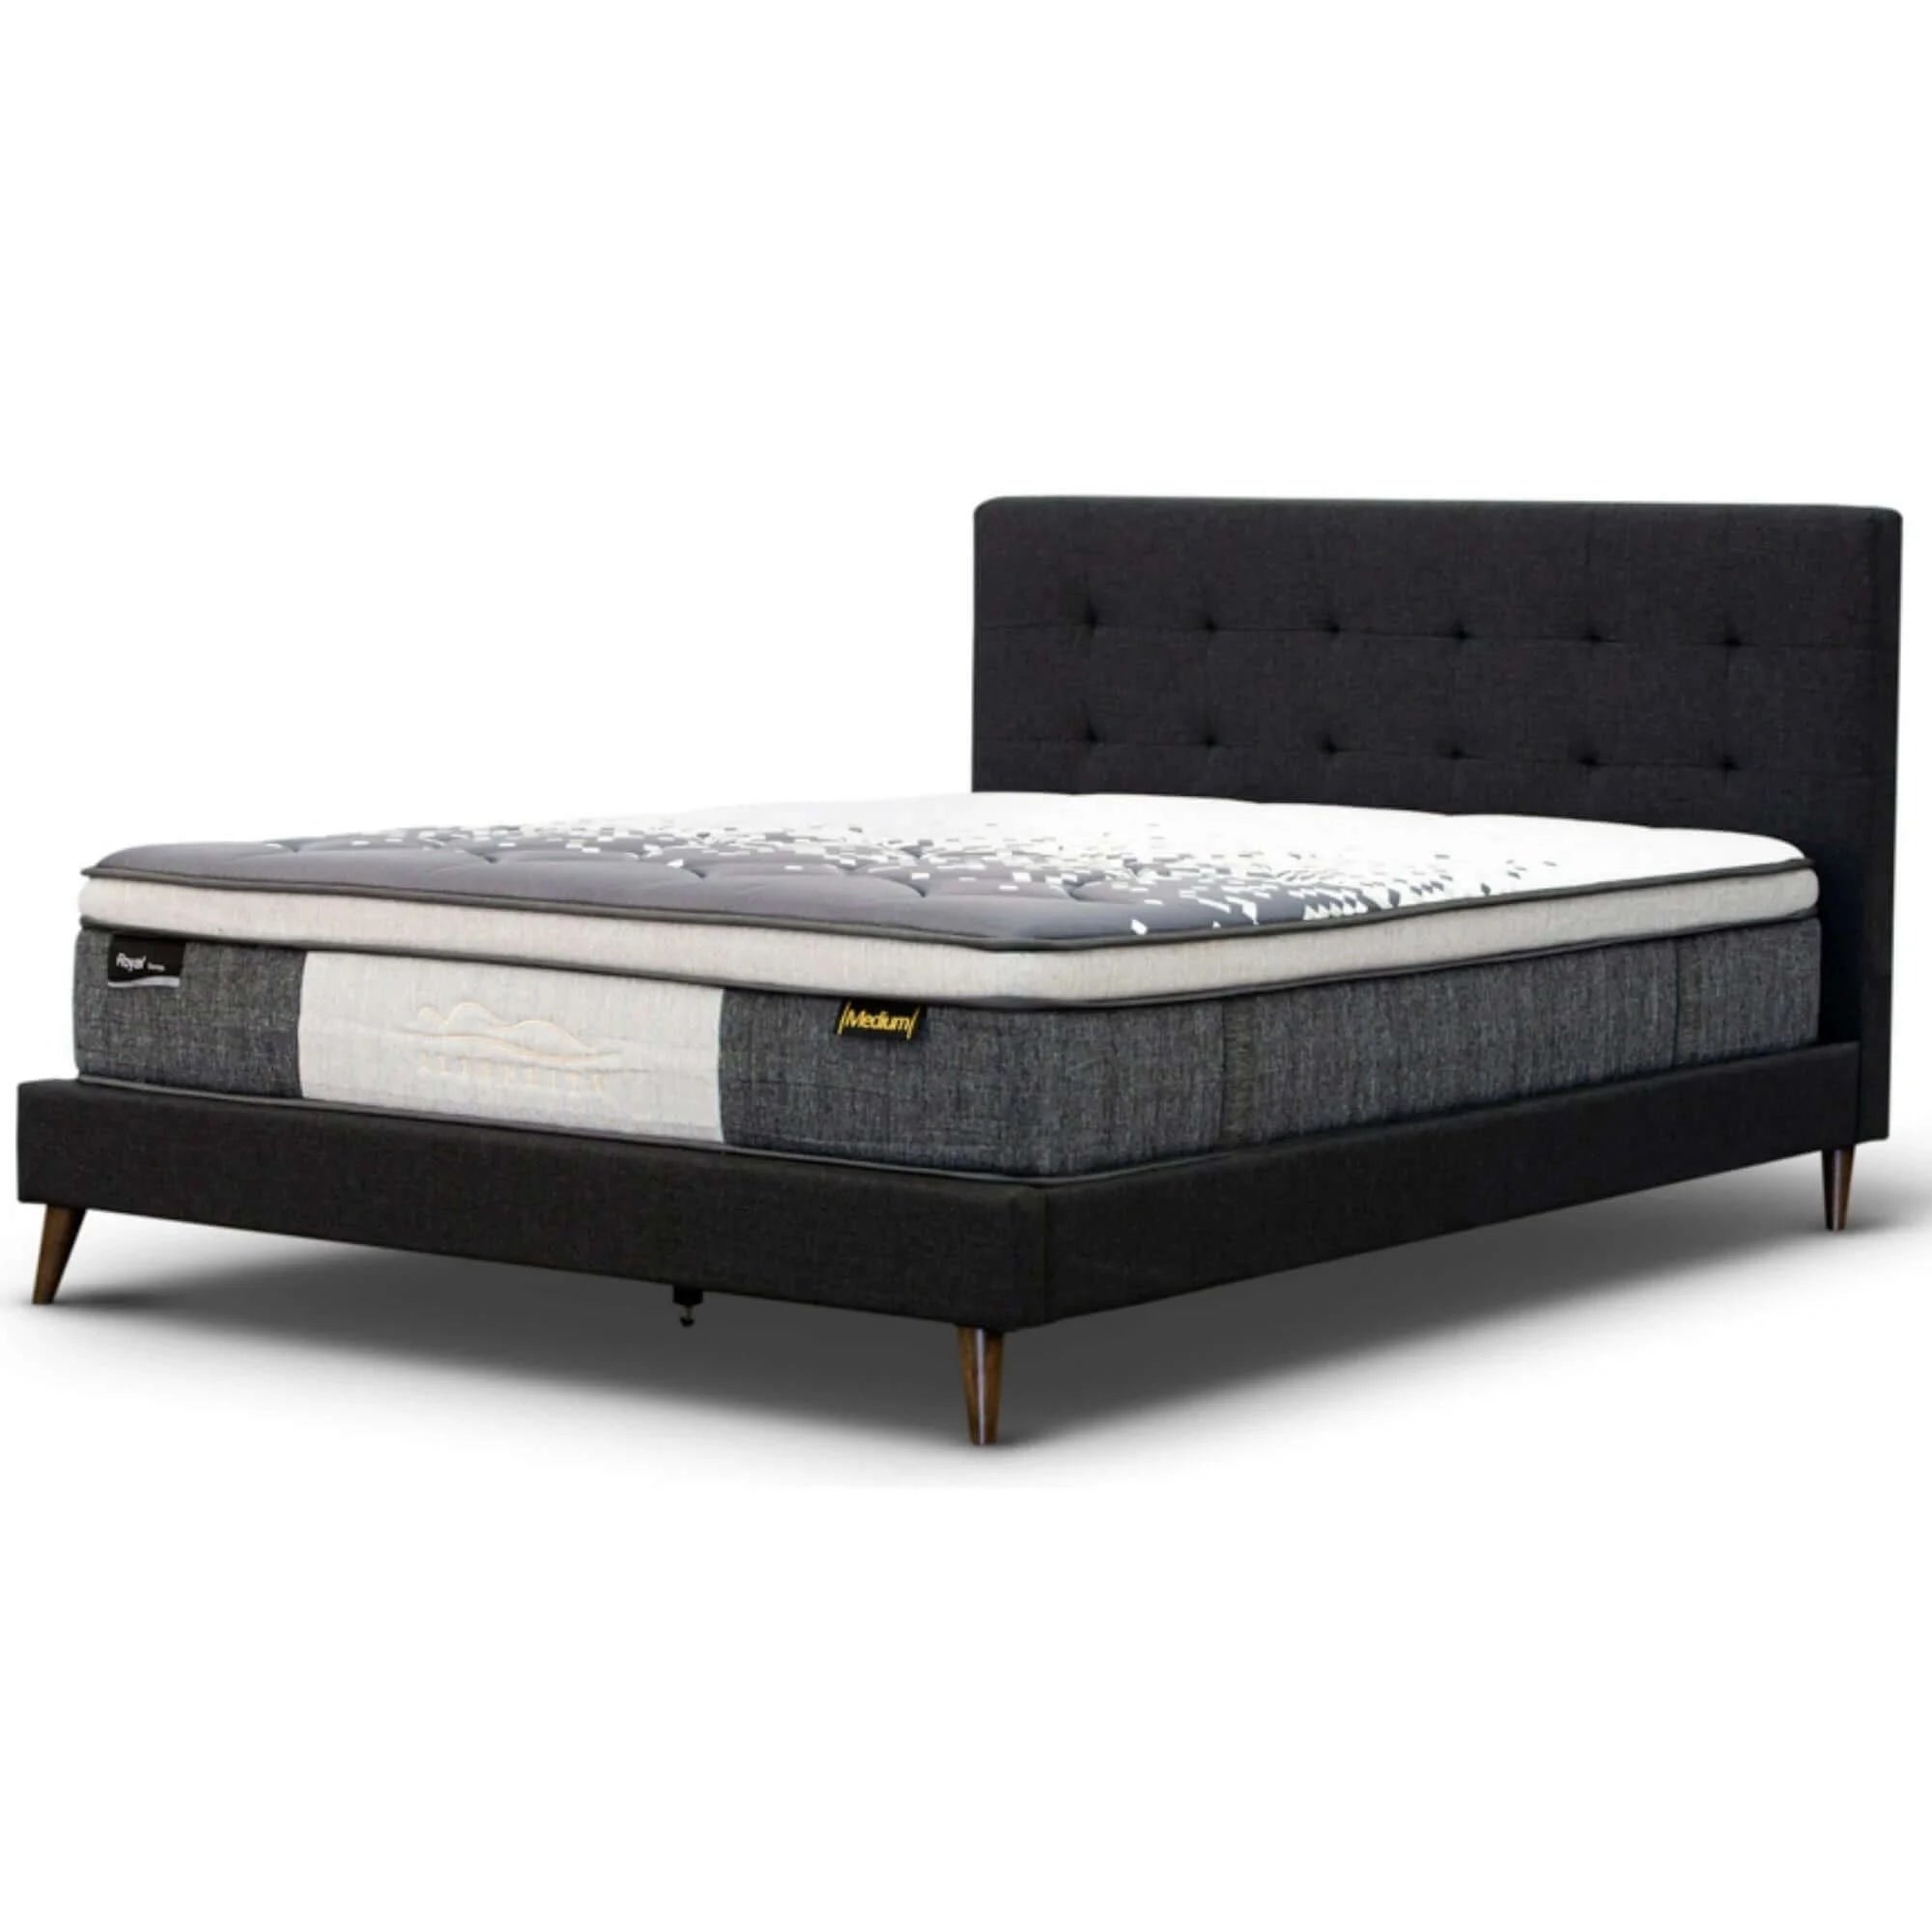 Buy volga king single bed platform frame fabric upholstered mattress base - charcoal - upinteriors-Upinteriors